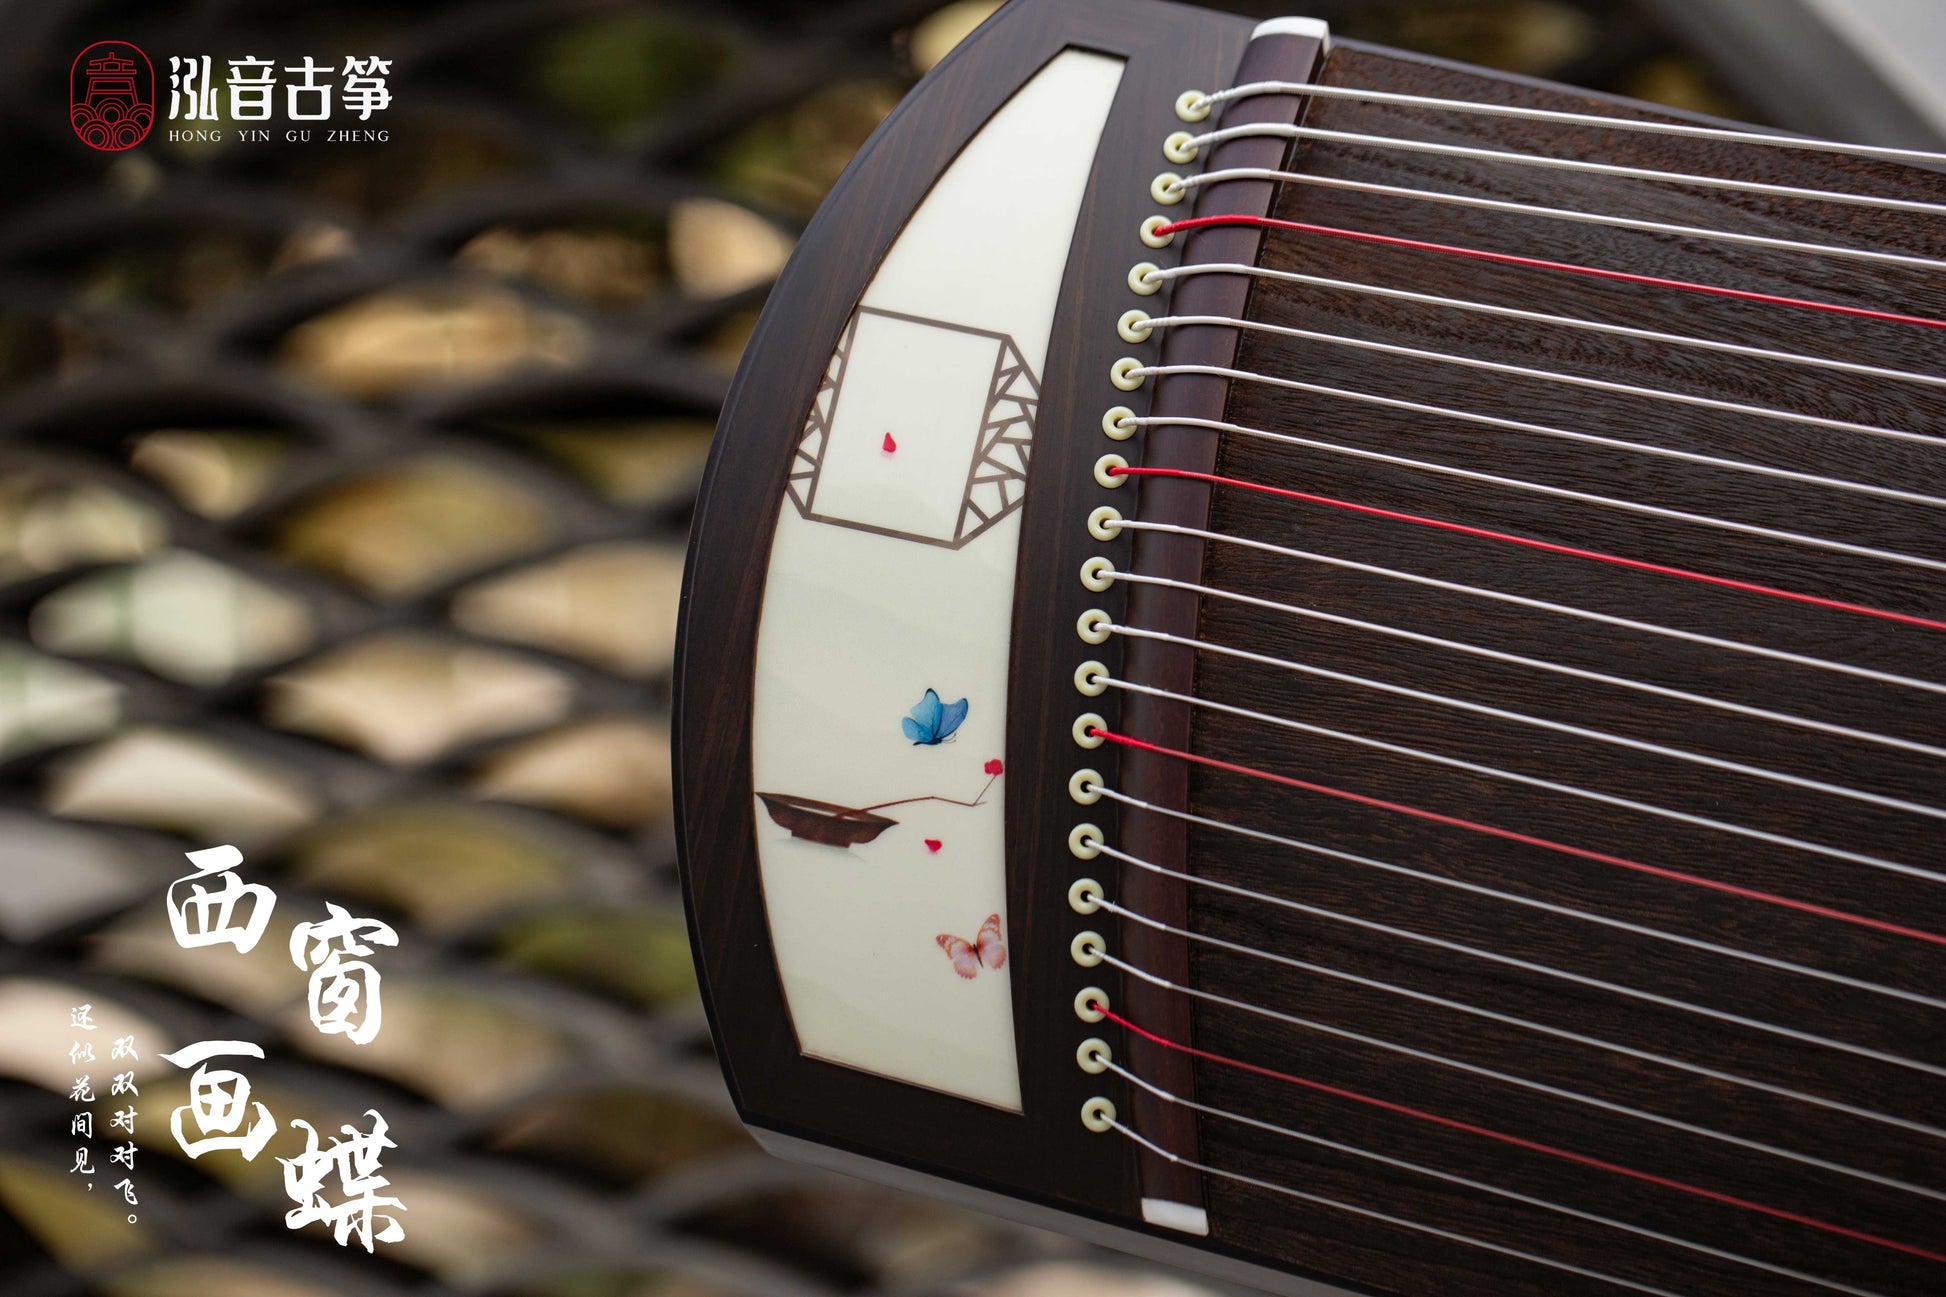 Chinese music store - premium travel-size guzheng, guzheng lessons near me, 高性价比便携古筝, 小古筝, 买古筝, 学古筝, 古筝老师